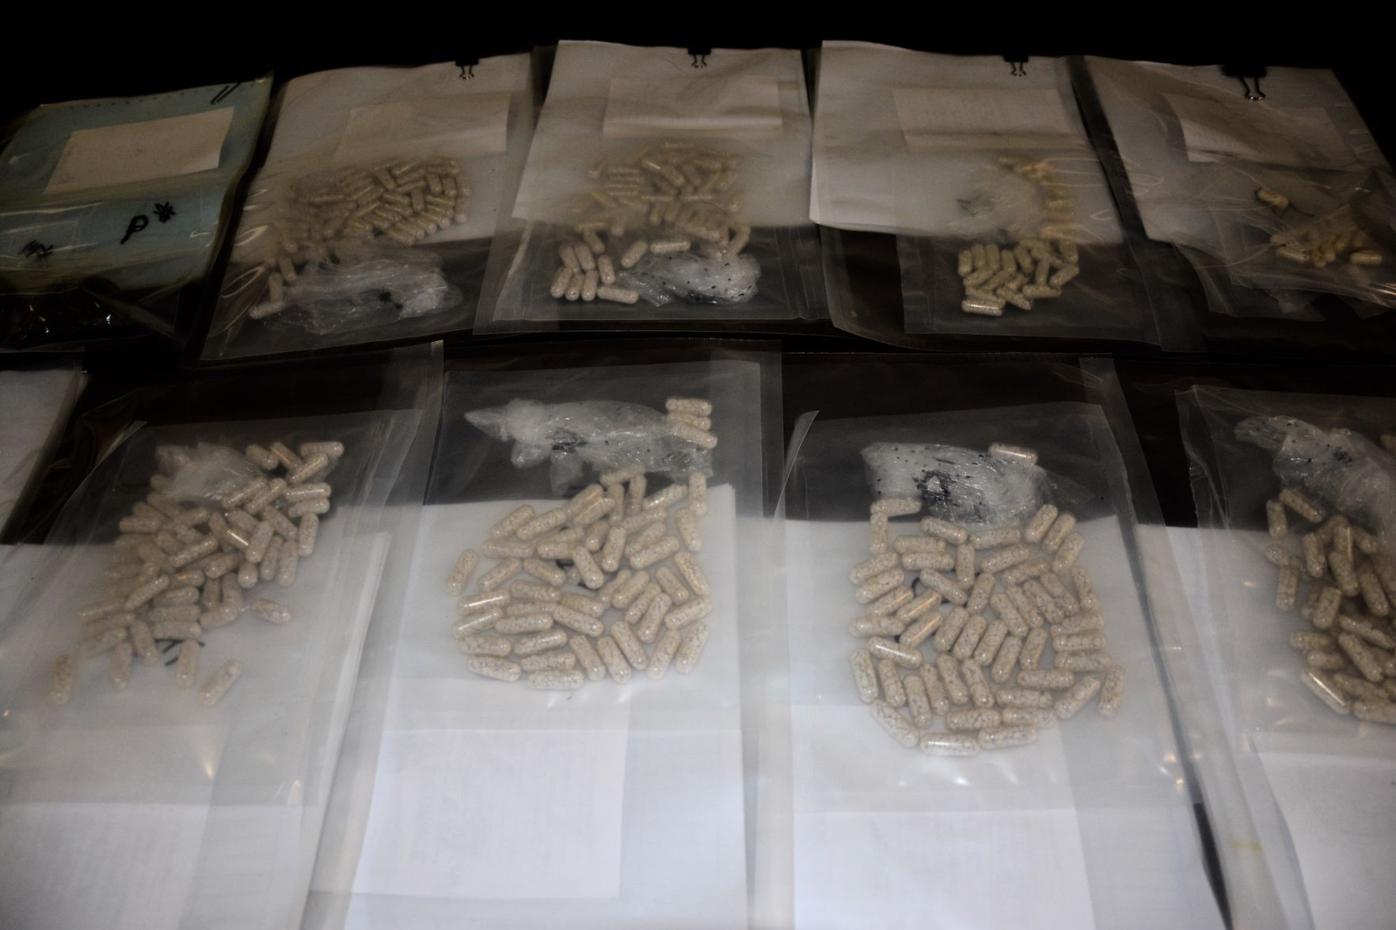 Record amount of fentanyl seized; suspected 'higher level dealer' arrested